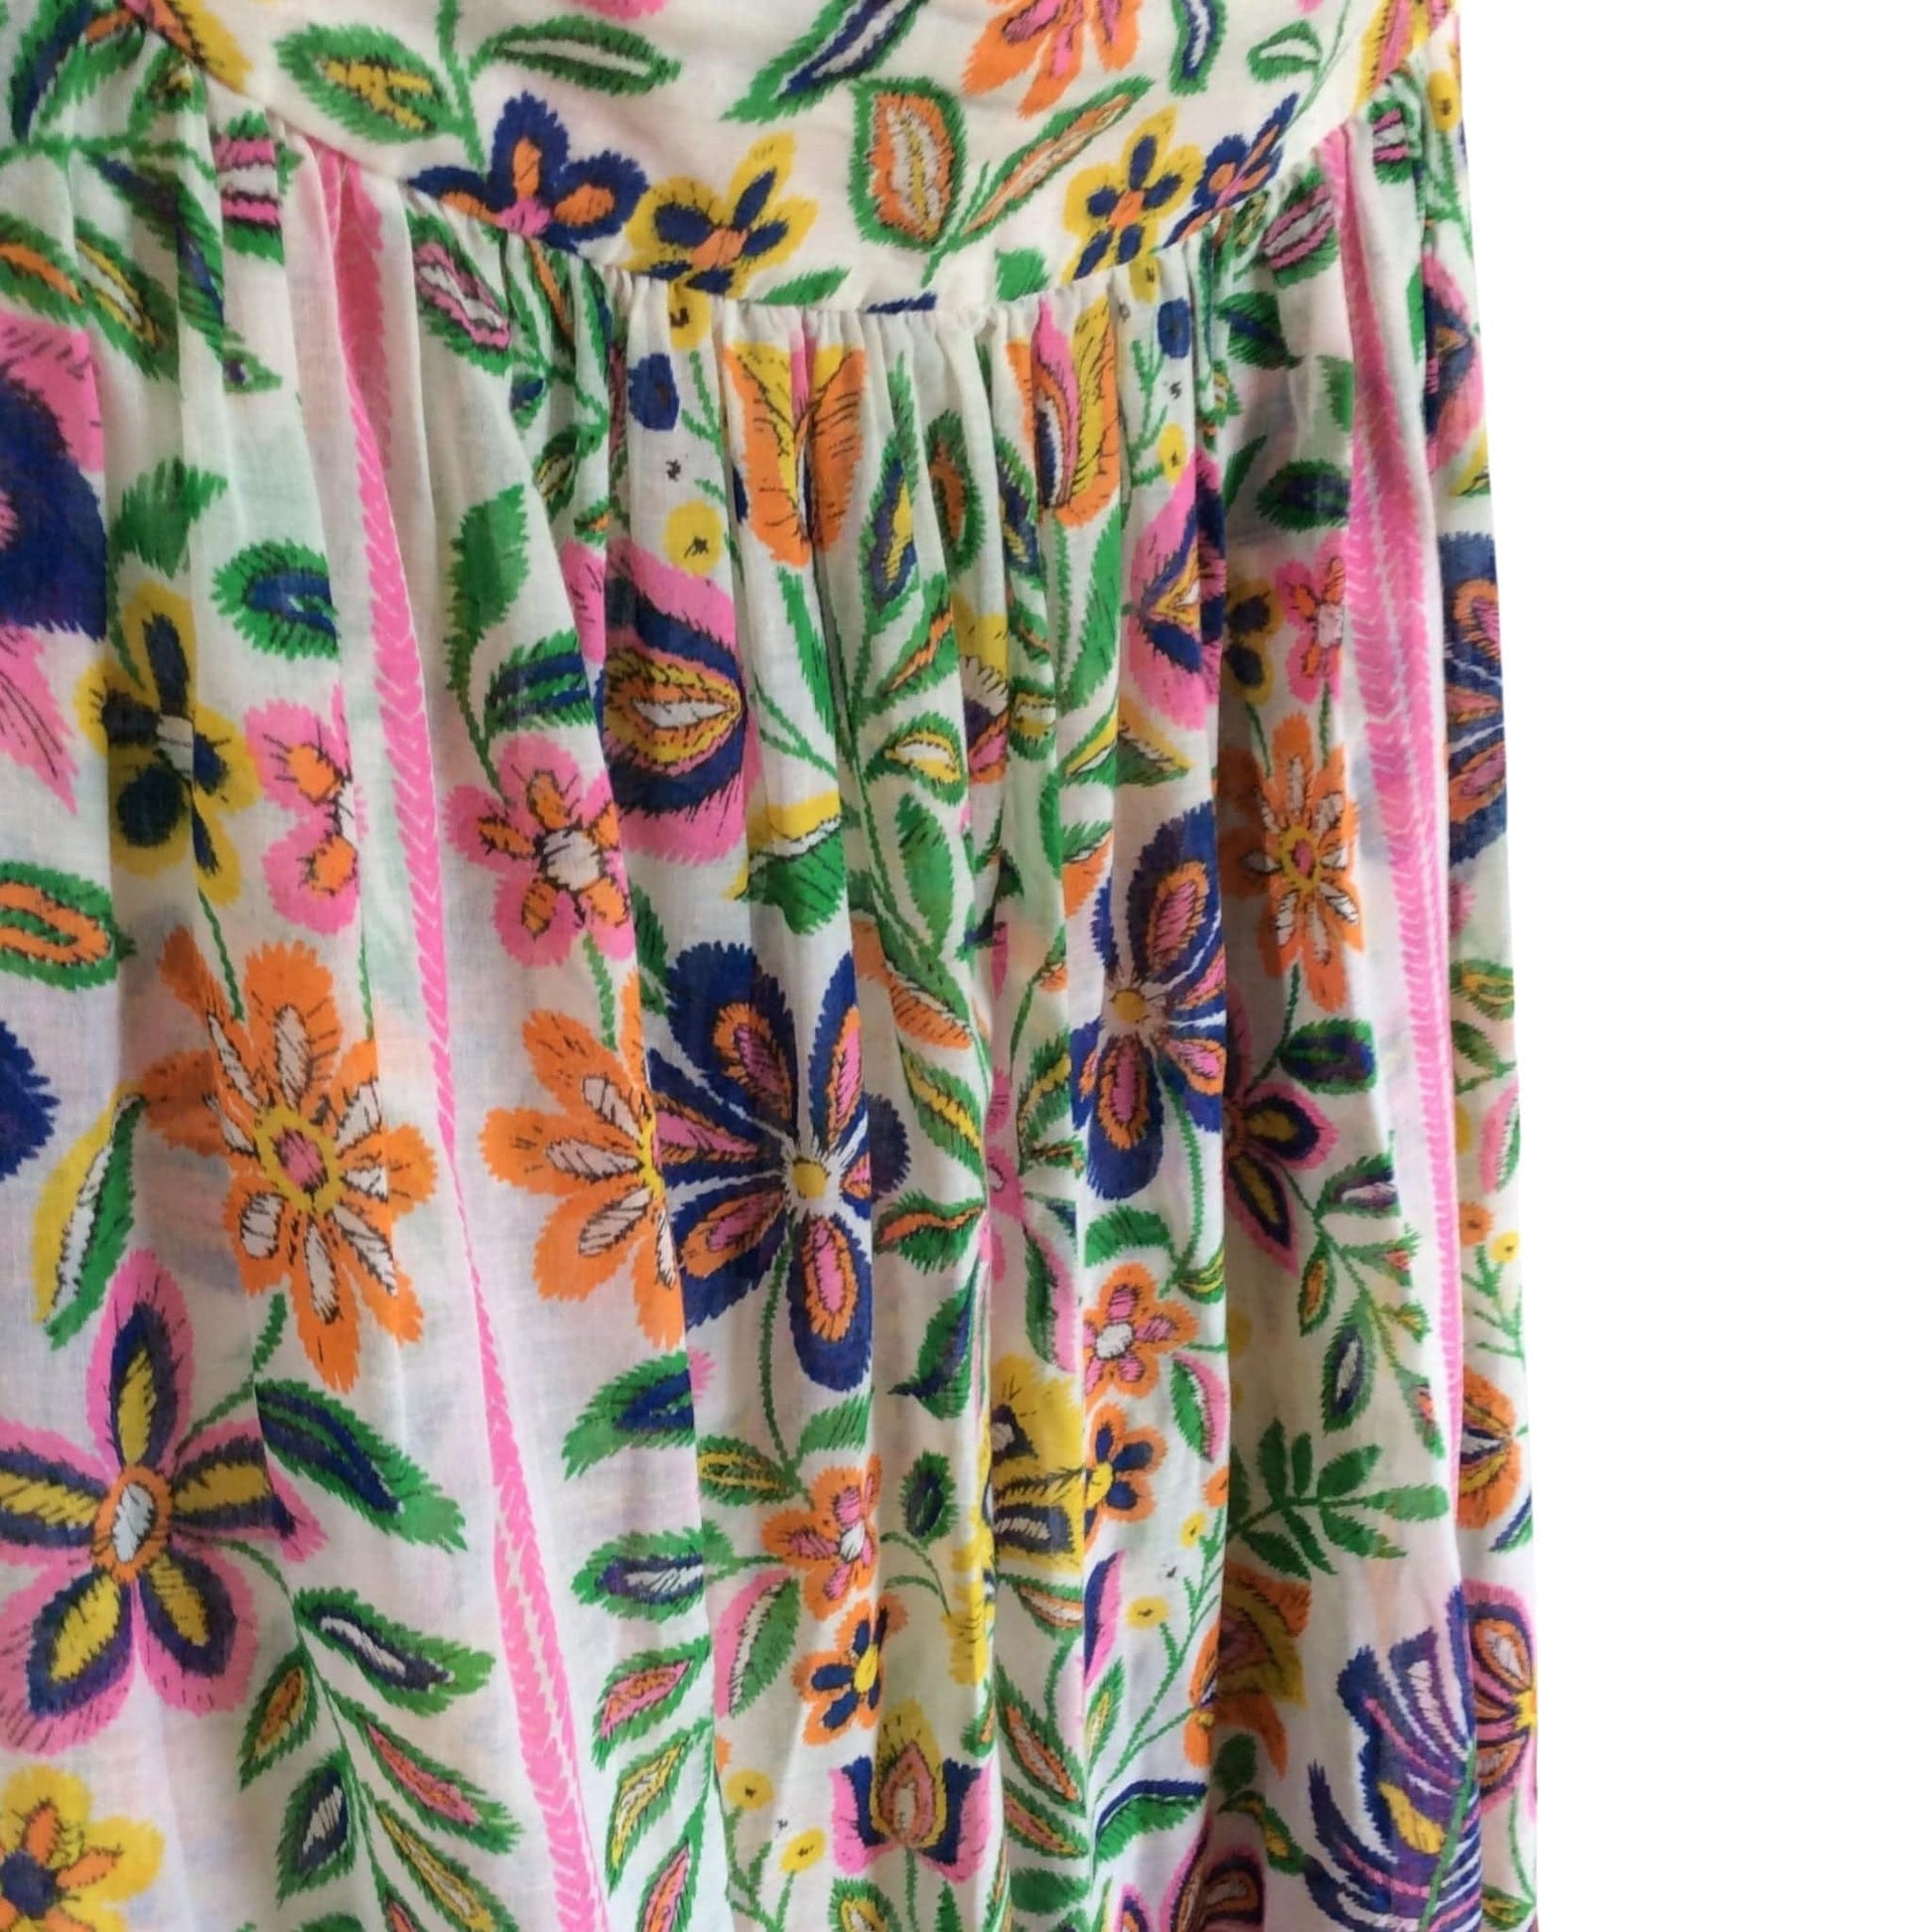 Transparent Floral Skirt Medium / Multi / Vintage 1980s